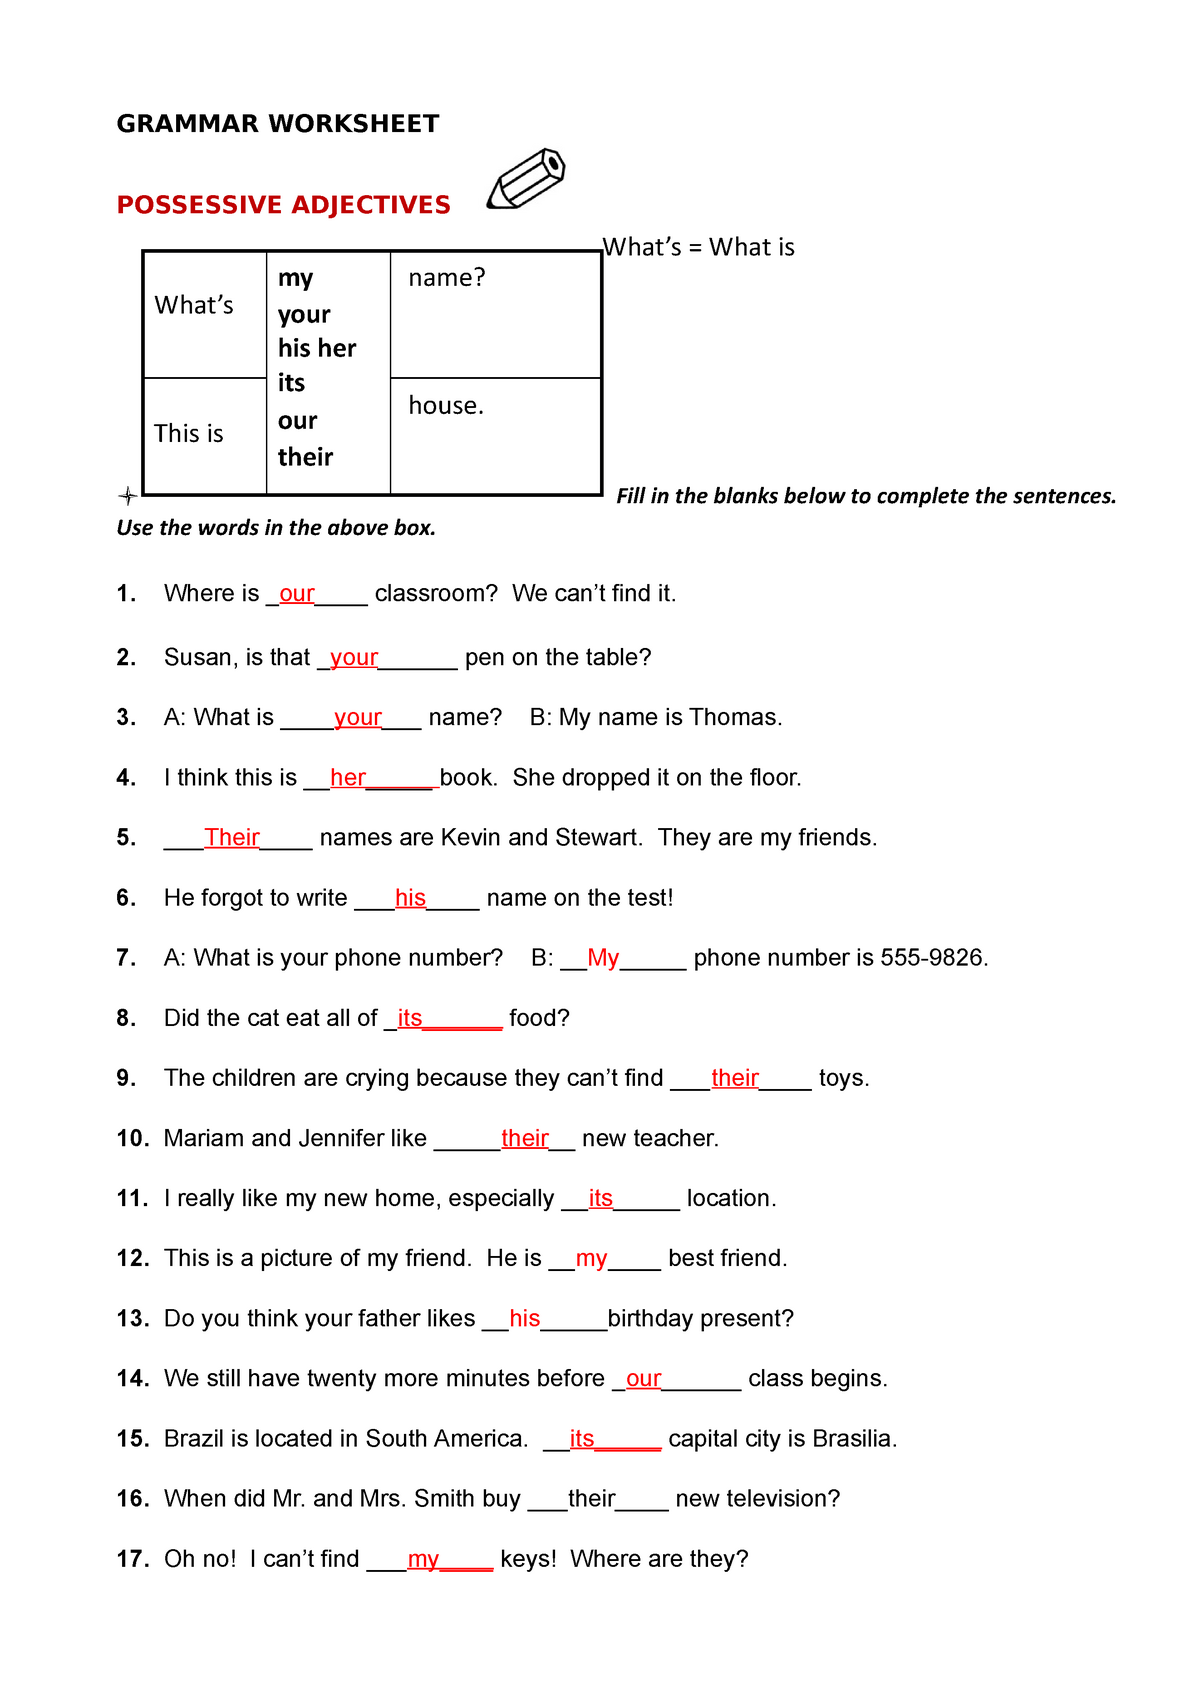 Grammar Worksheet Possessive Pronouns Contestado